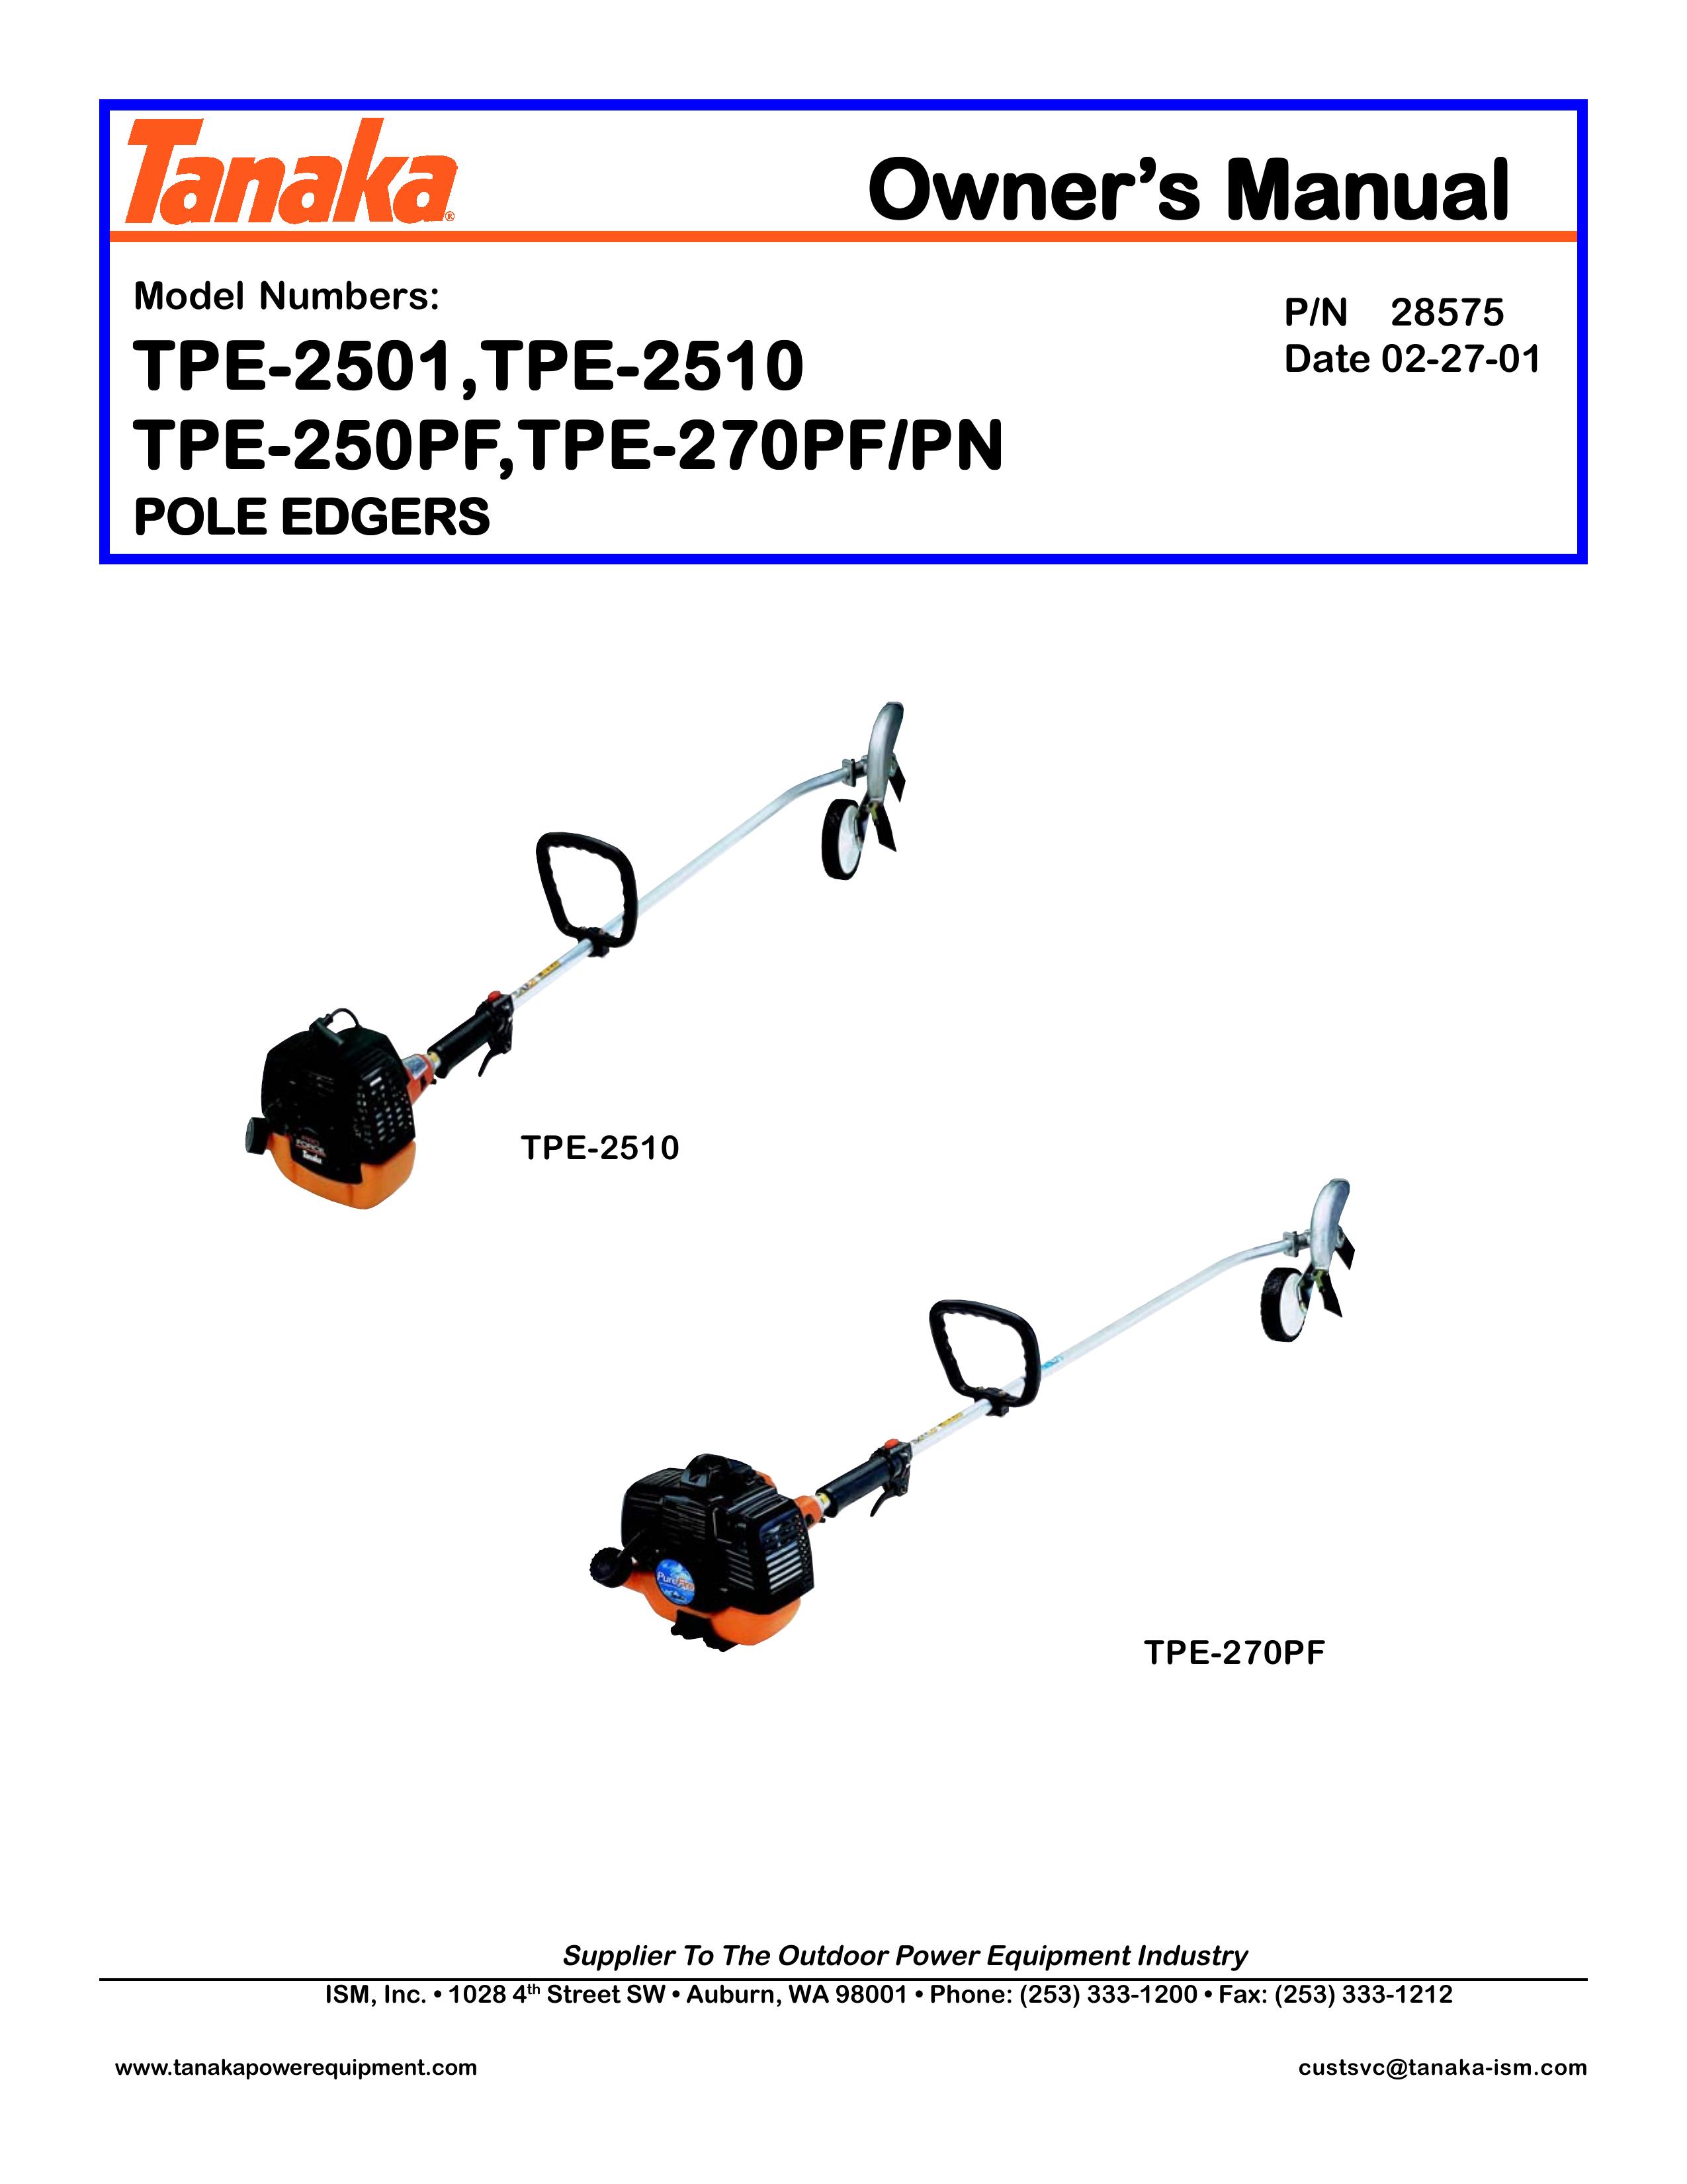 Tanaka TPE-270PF/PN Pole Saw User Manual